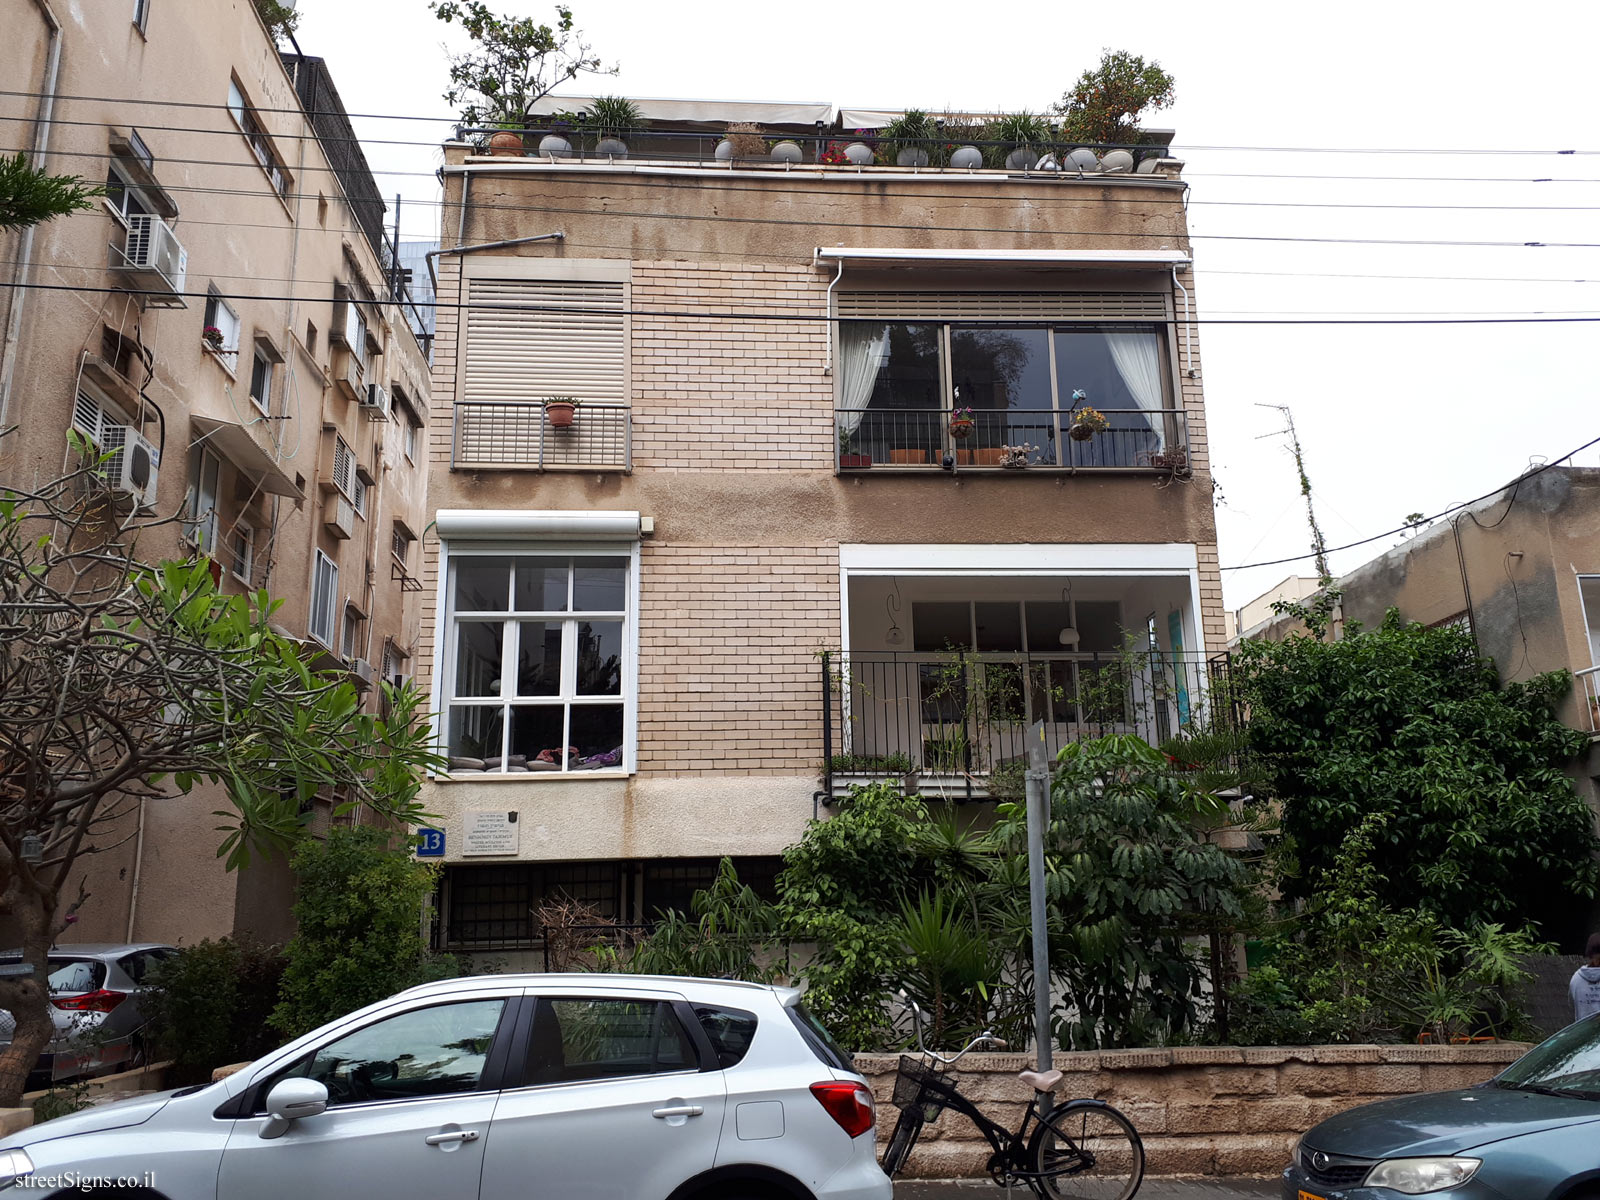 The house of Benhamin Tammuz - Ha-Rav Levi Yitskhak St 13, Tel Aviv-Yafo, Israel